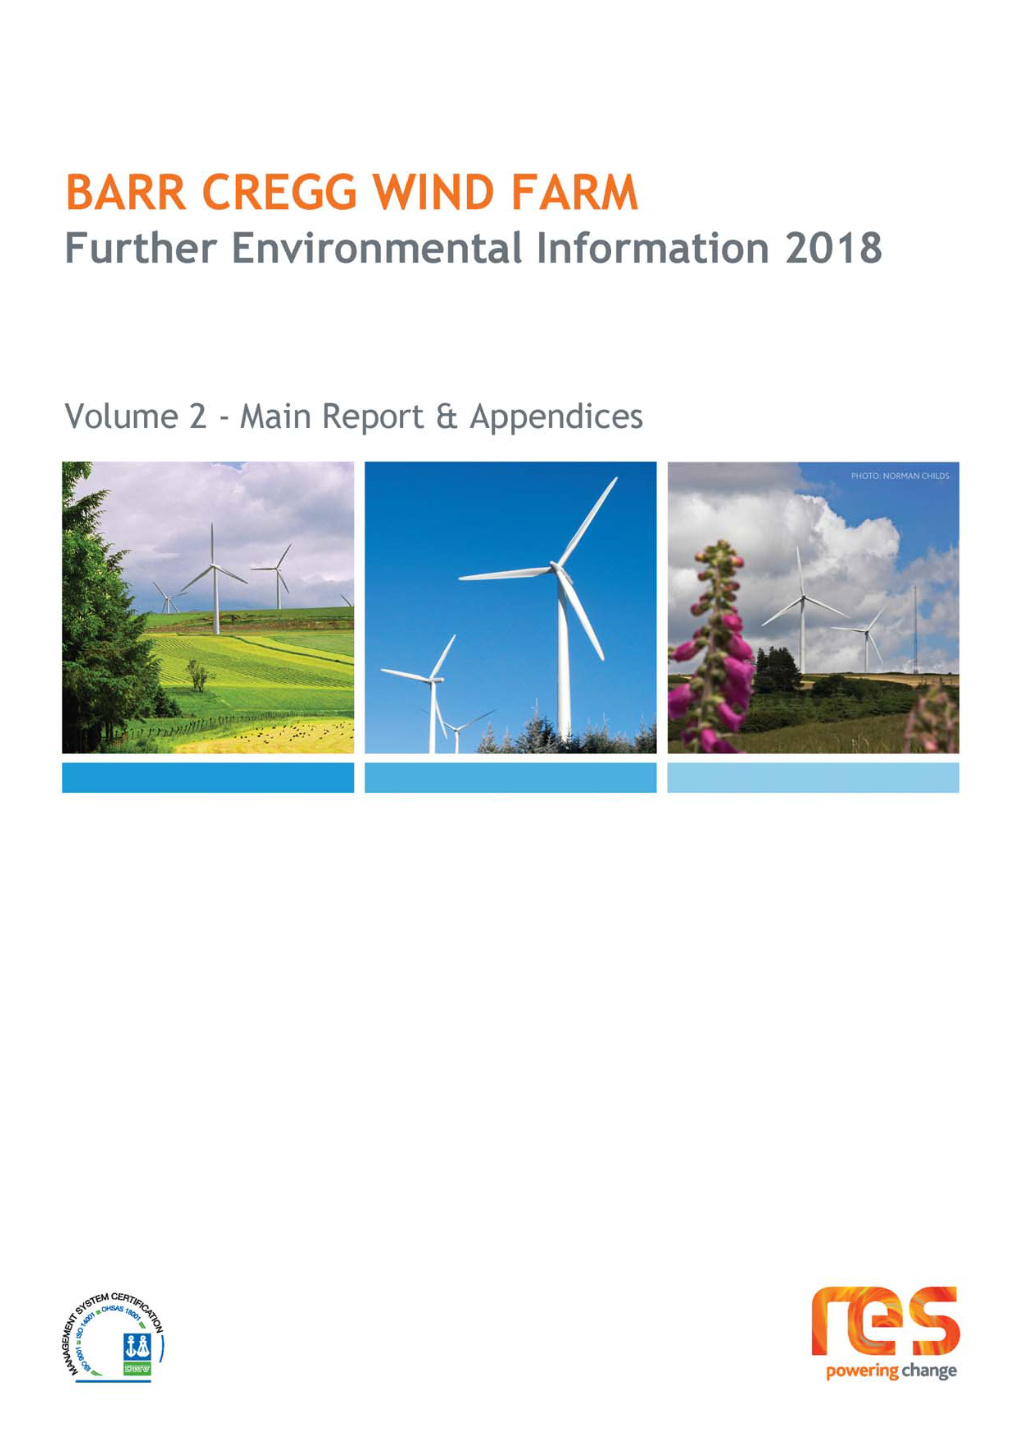 Volume 2 - Main Report & Appendices Barr Cregg Wind Farm Introduction FEI 2018